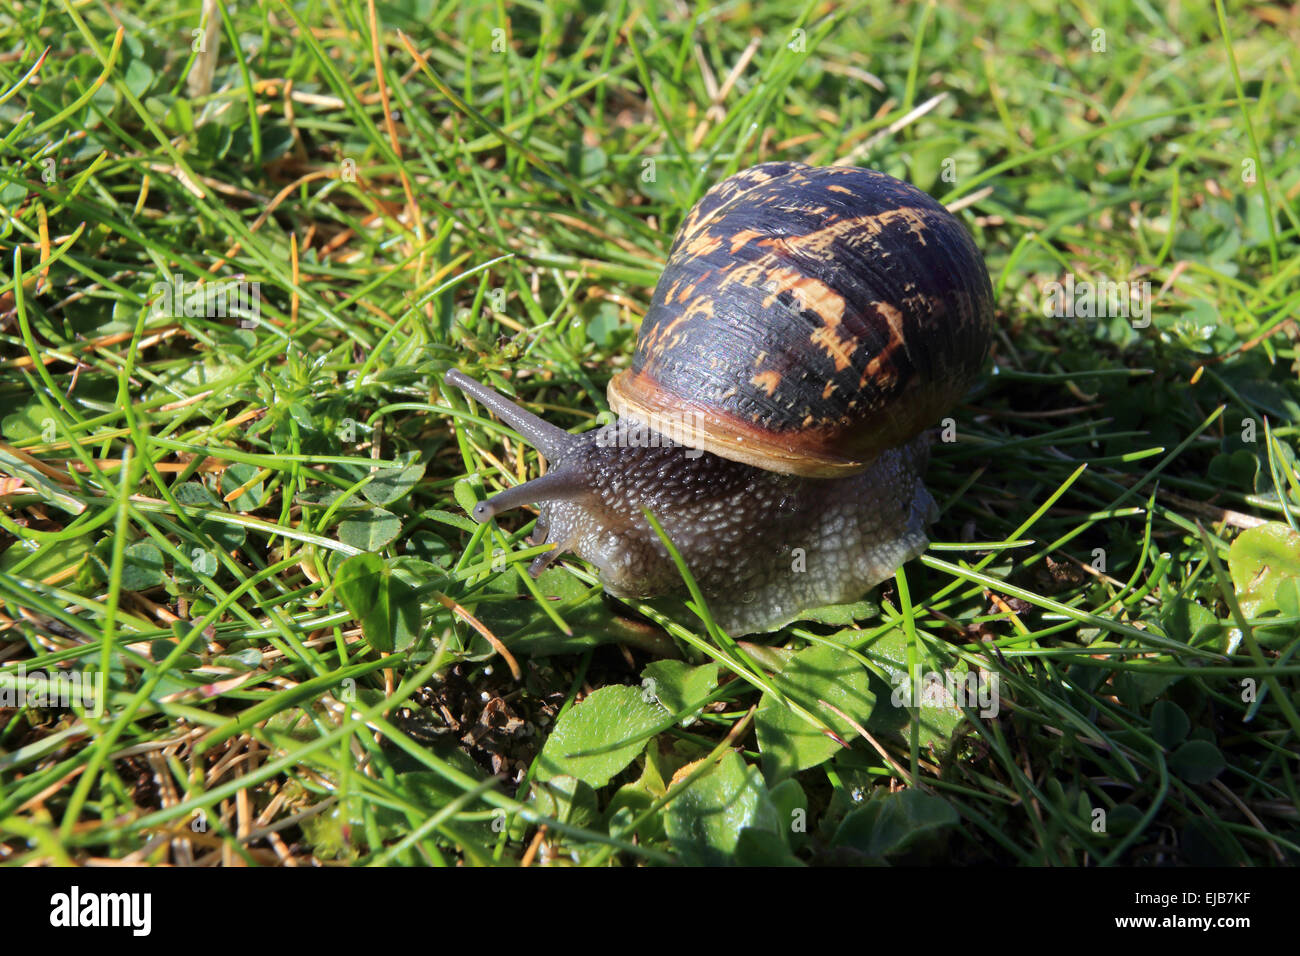 Cornu aspersum, garden snail Stock Photo